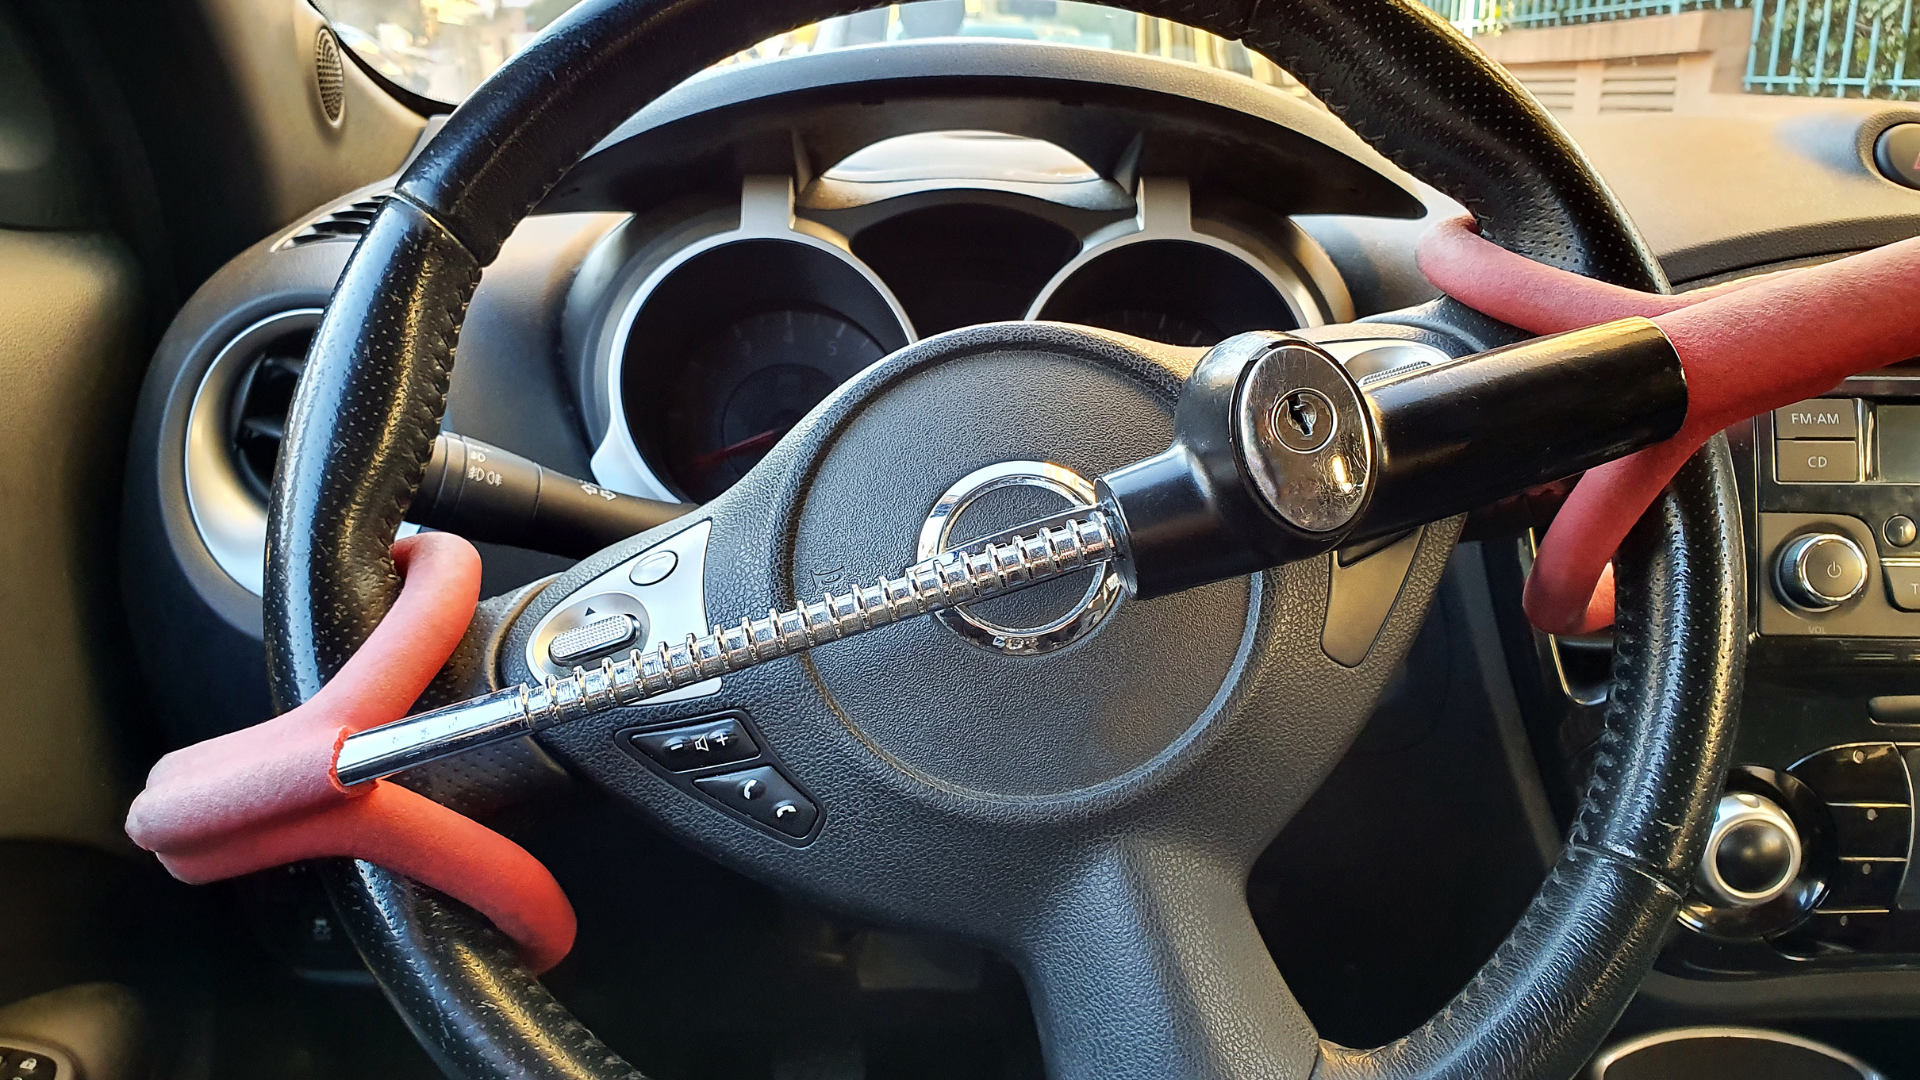 OPPD partnering with Kia and Hyundai to provide steering wheel locks - City  of Overland Park, Kansas